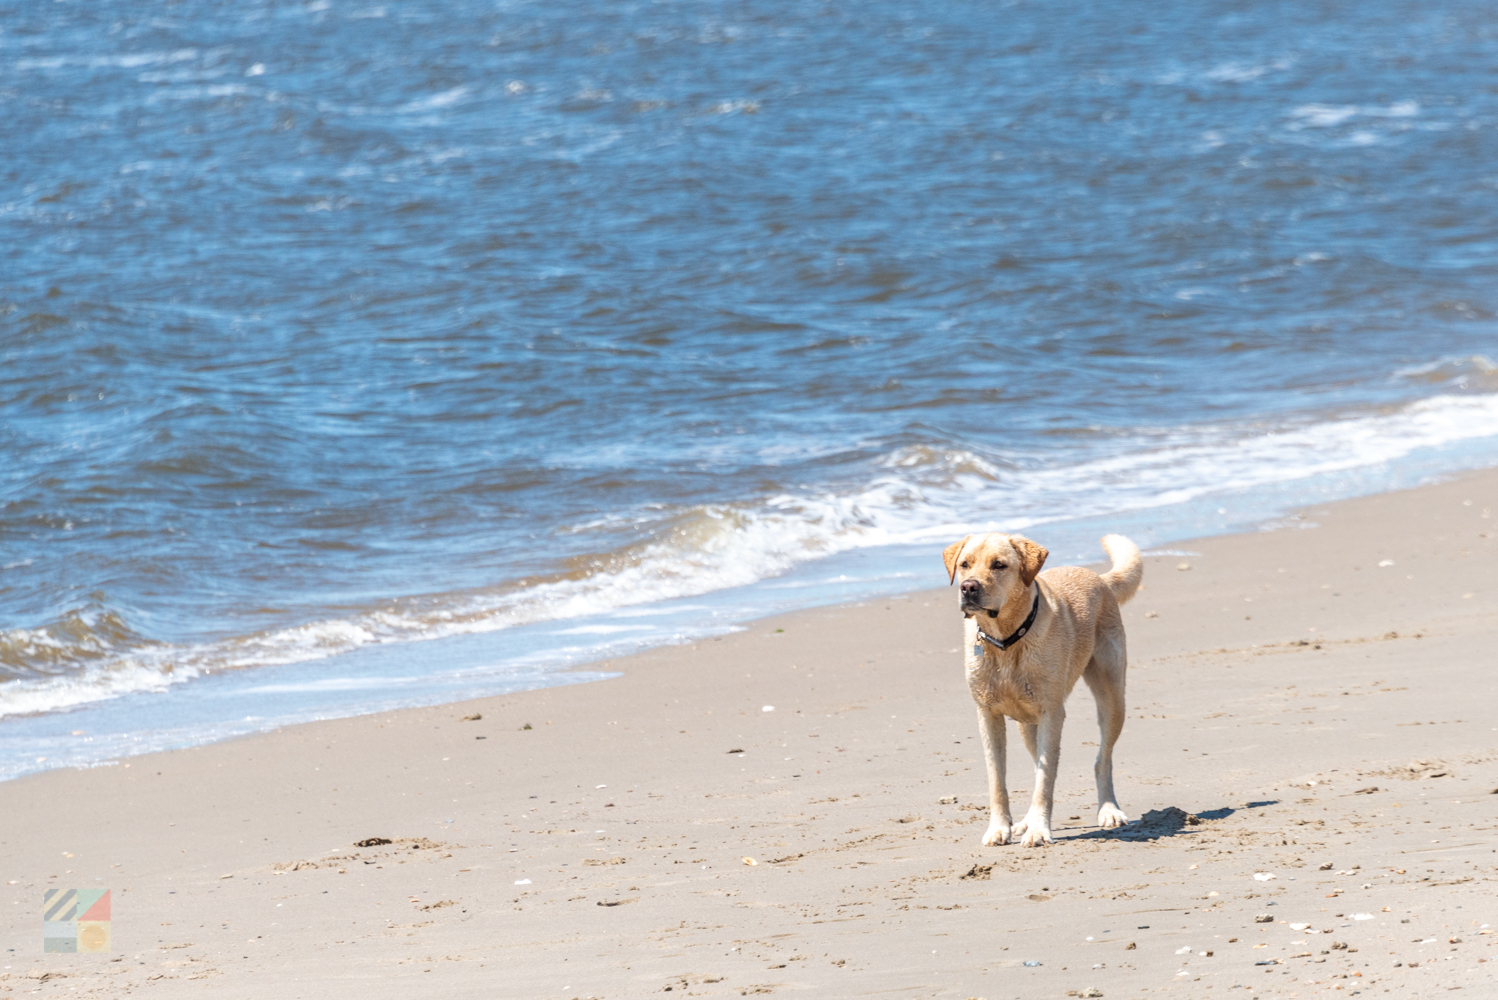 A puppy on the beach